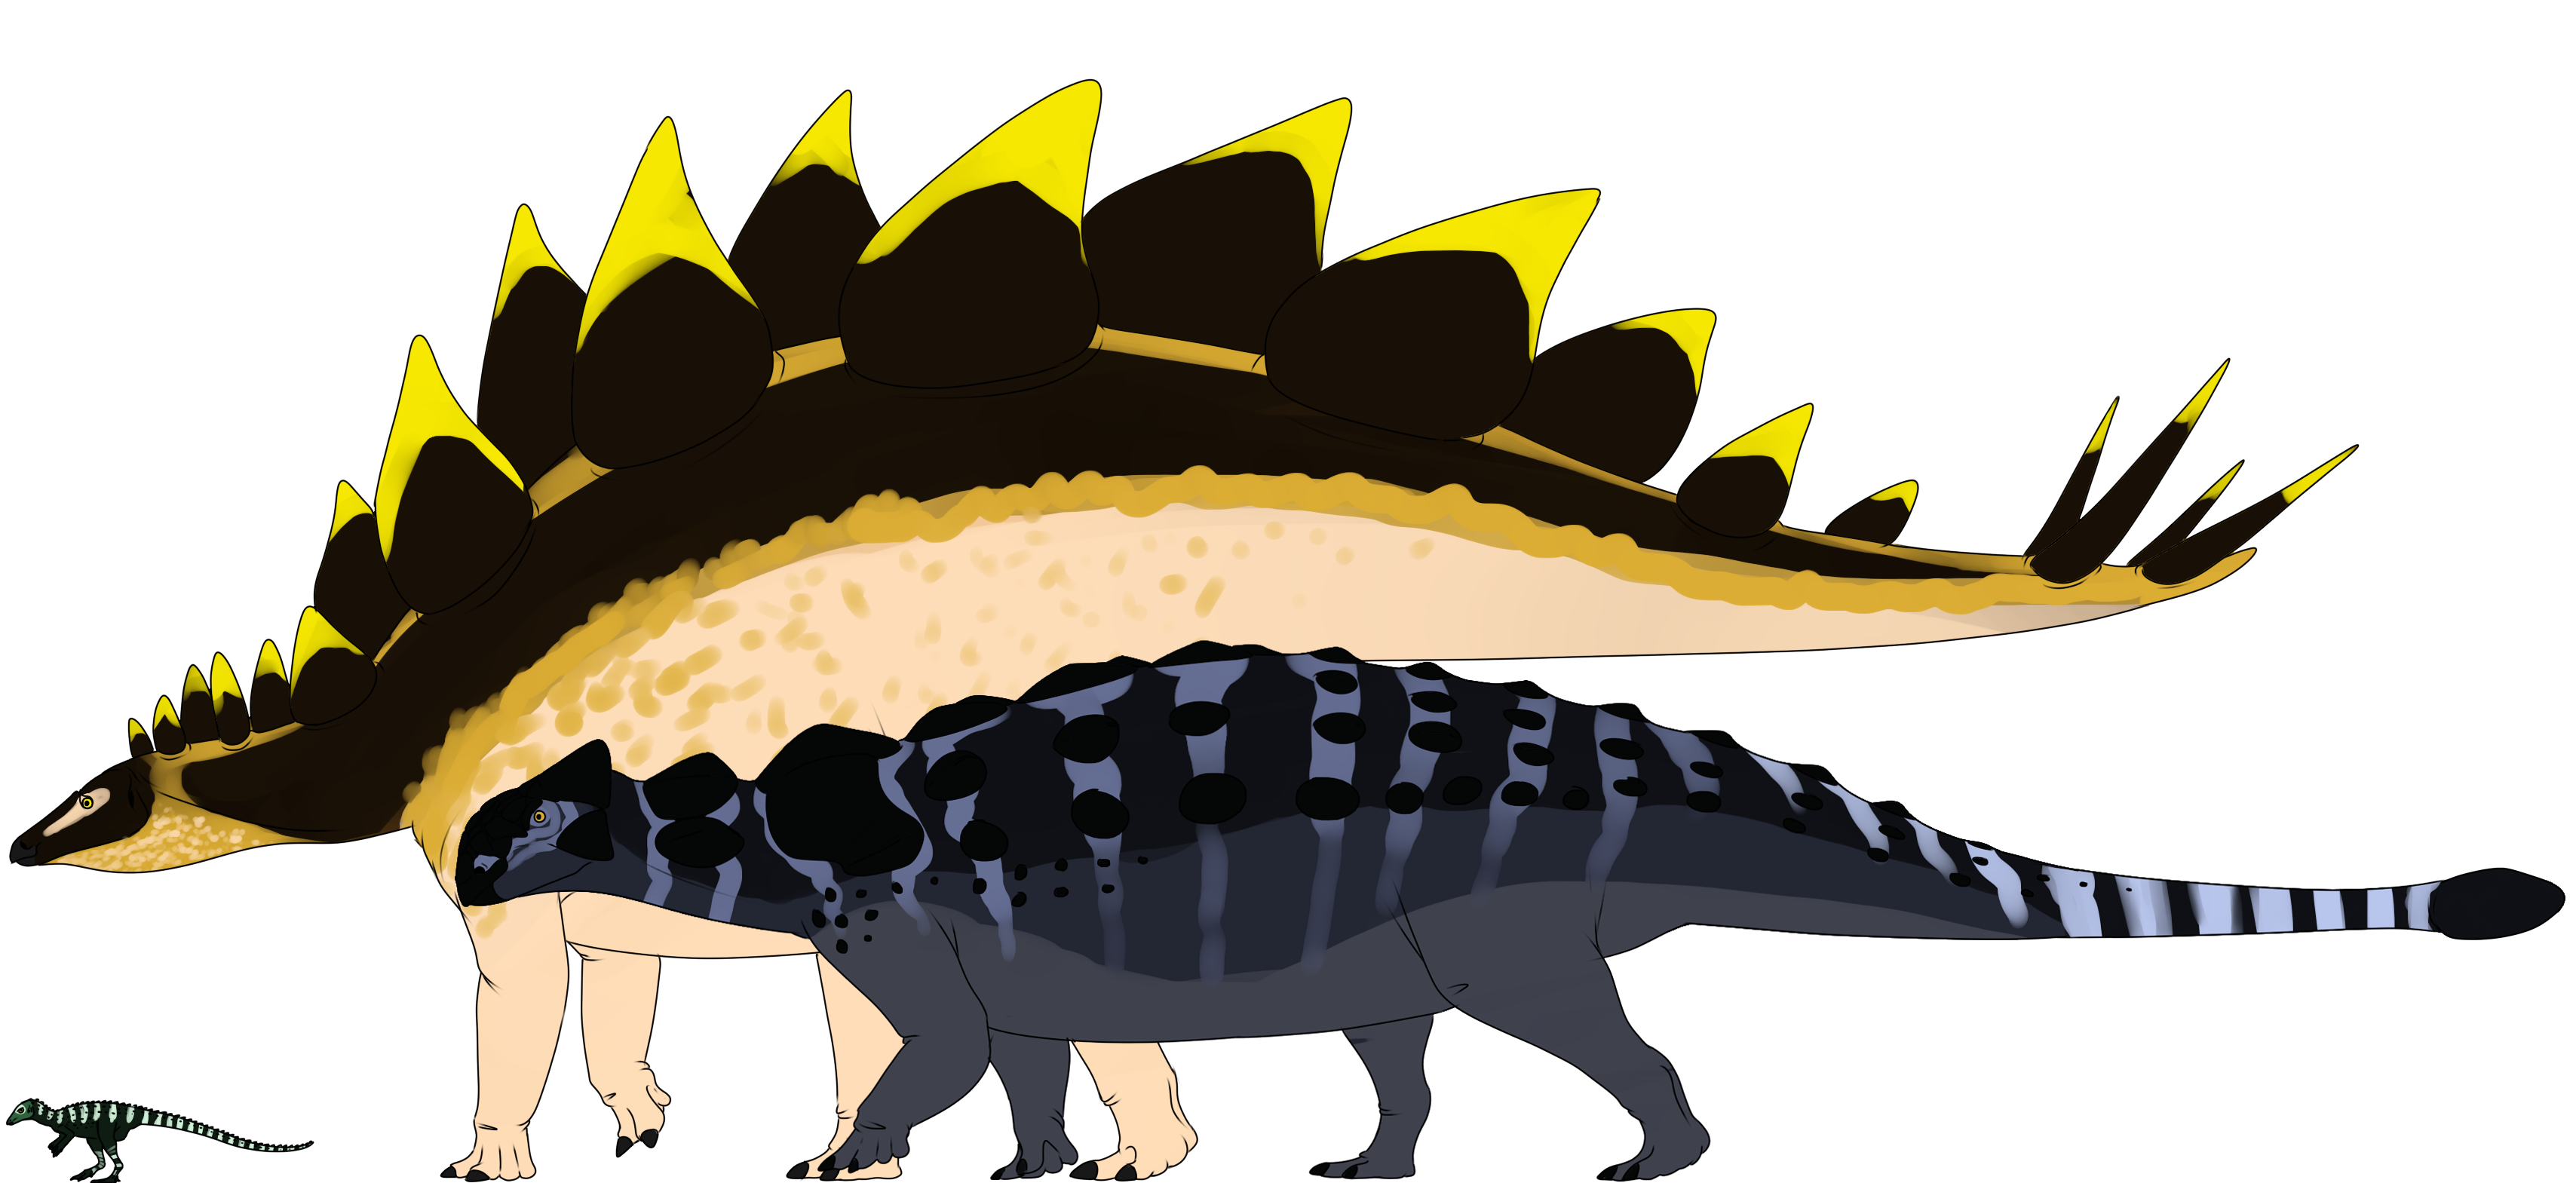 scutellosaurus__stegosaurus__ankylosaurus_by_stygimolochspinifer-d5una4i.png